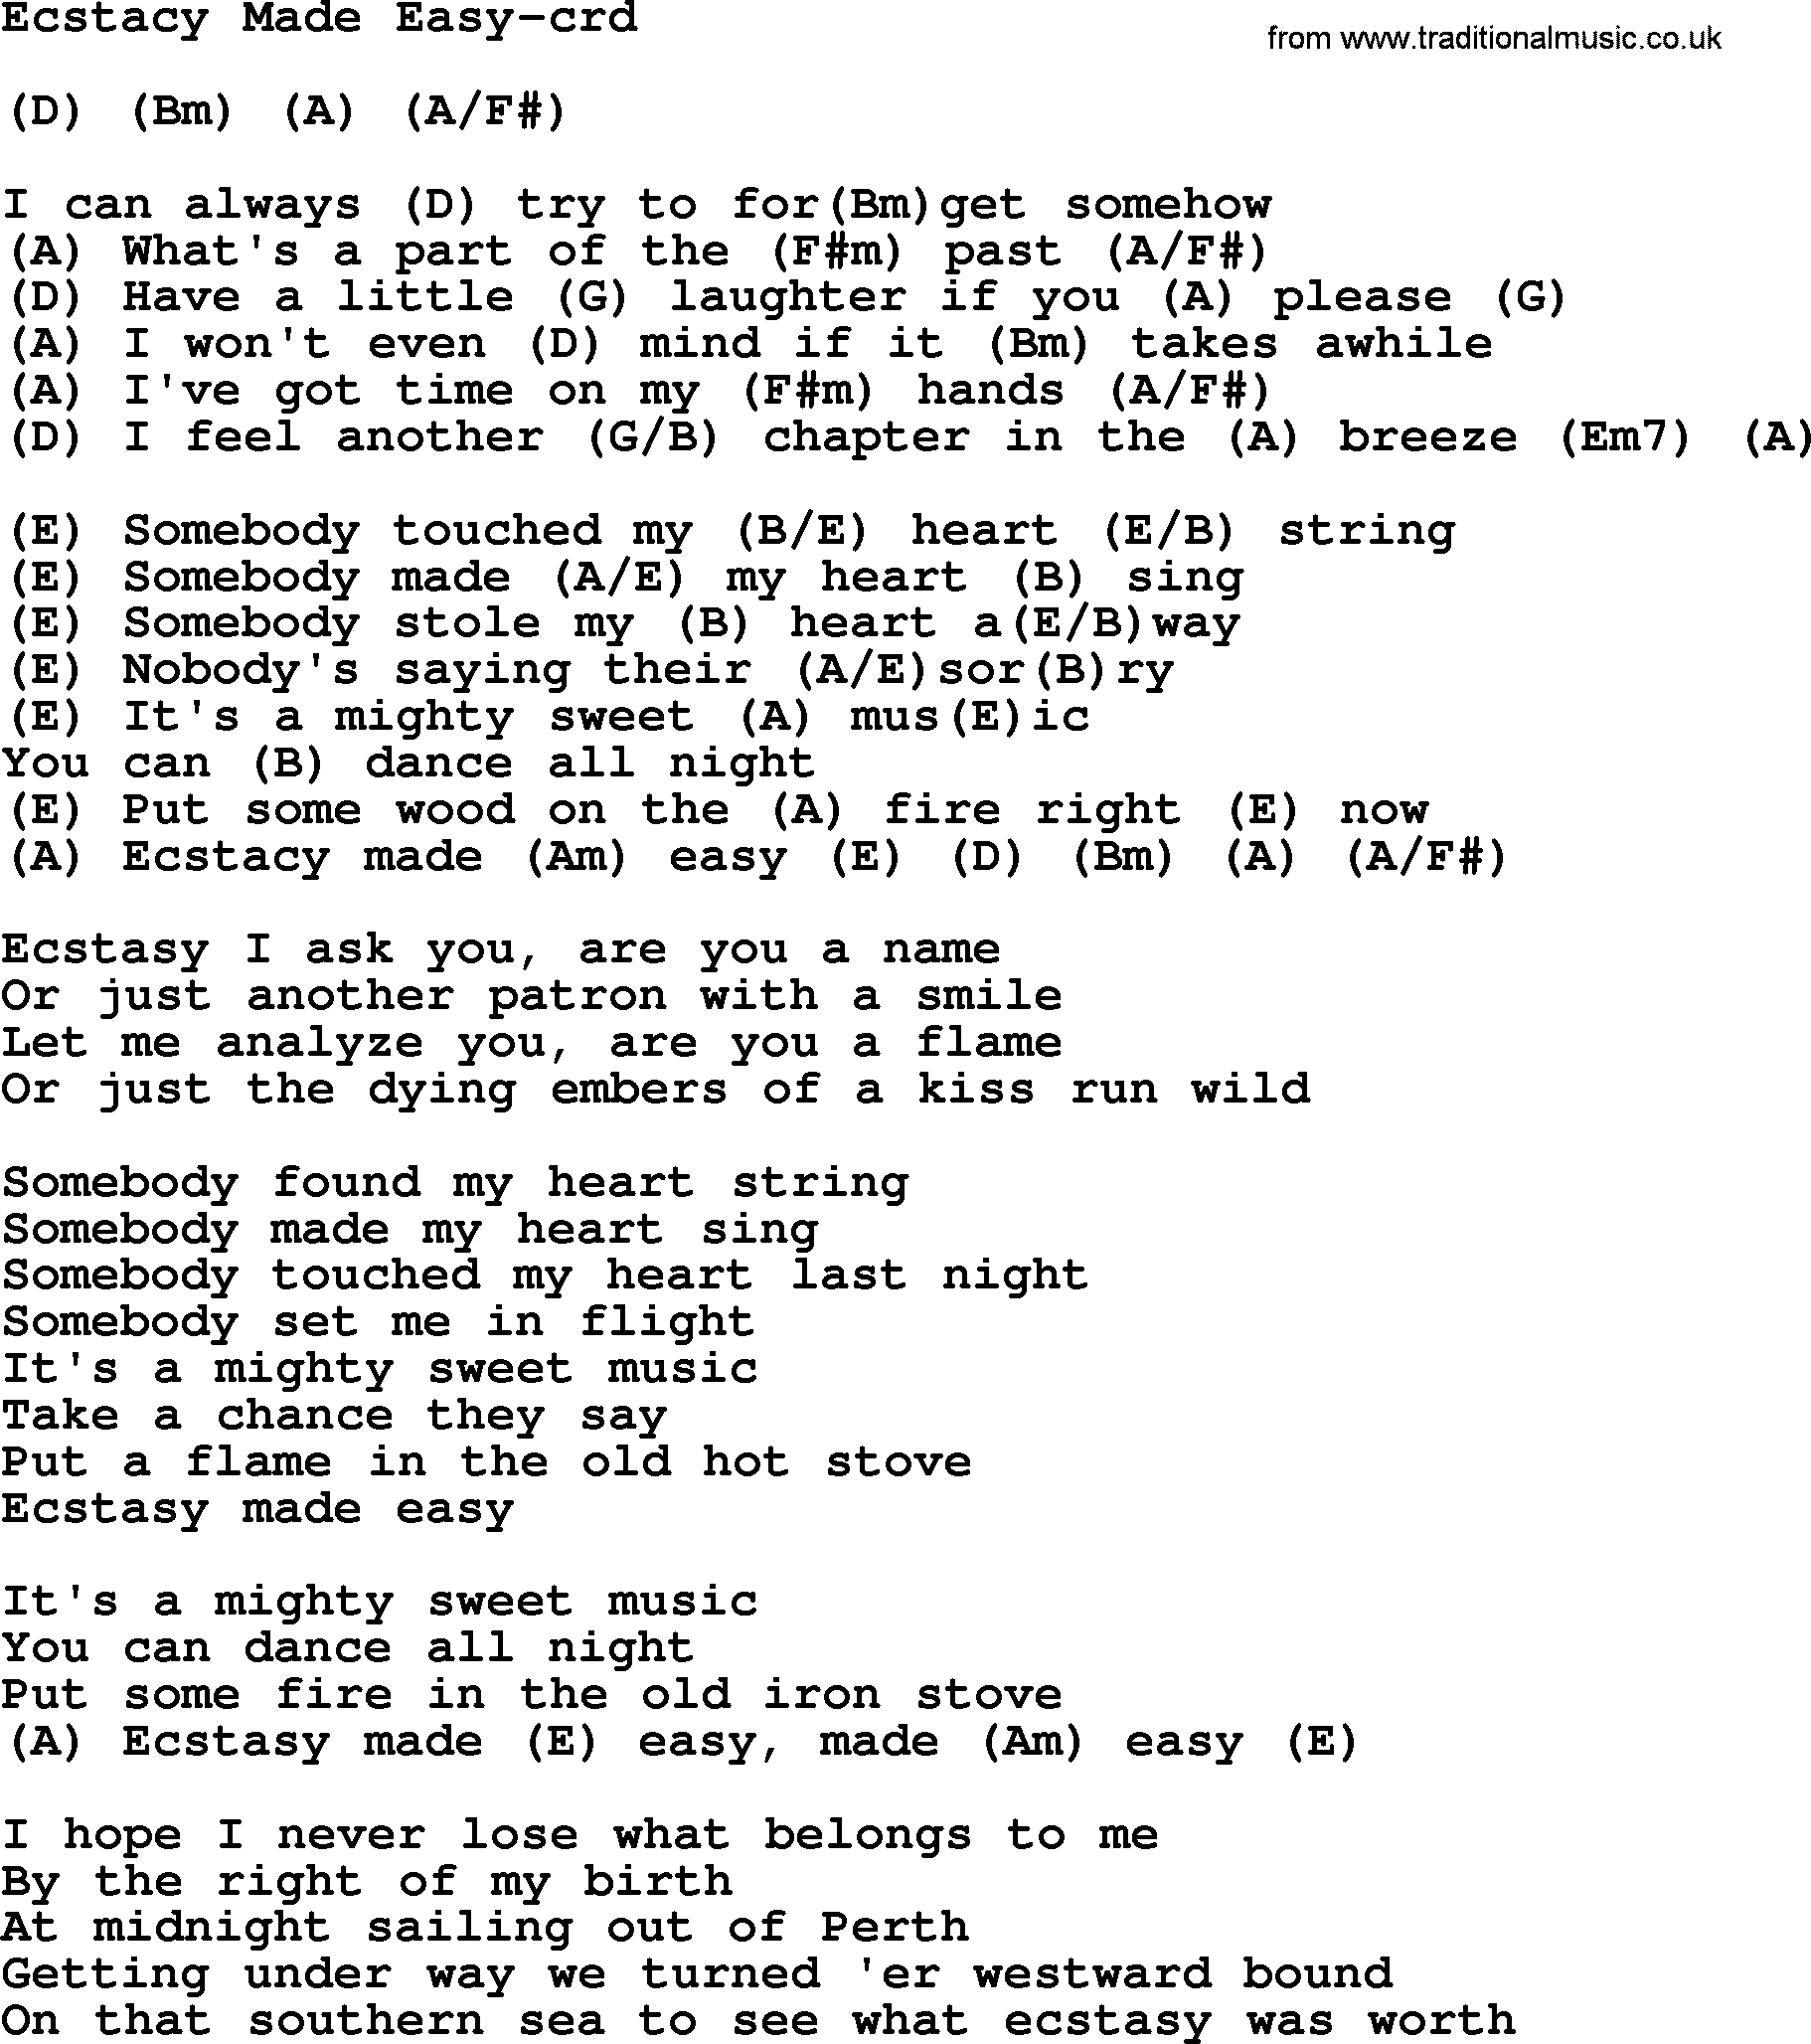 Gordon Lightfoot song Ecstacy Made Easy, lyrics and chords